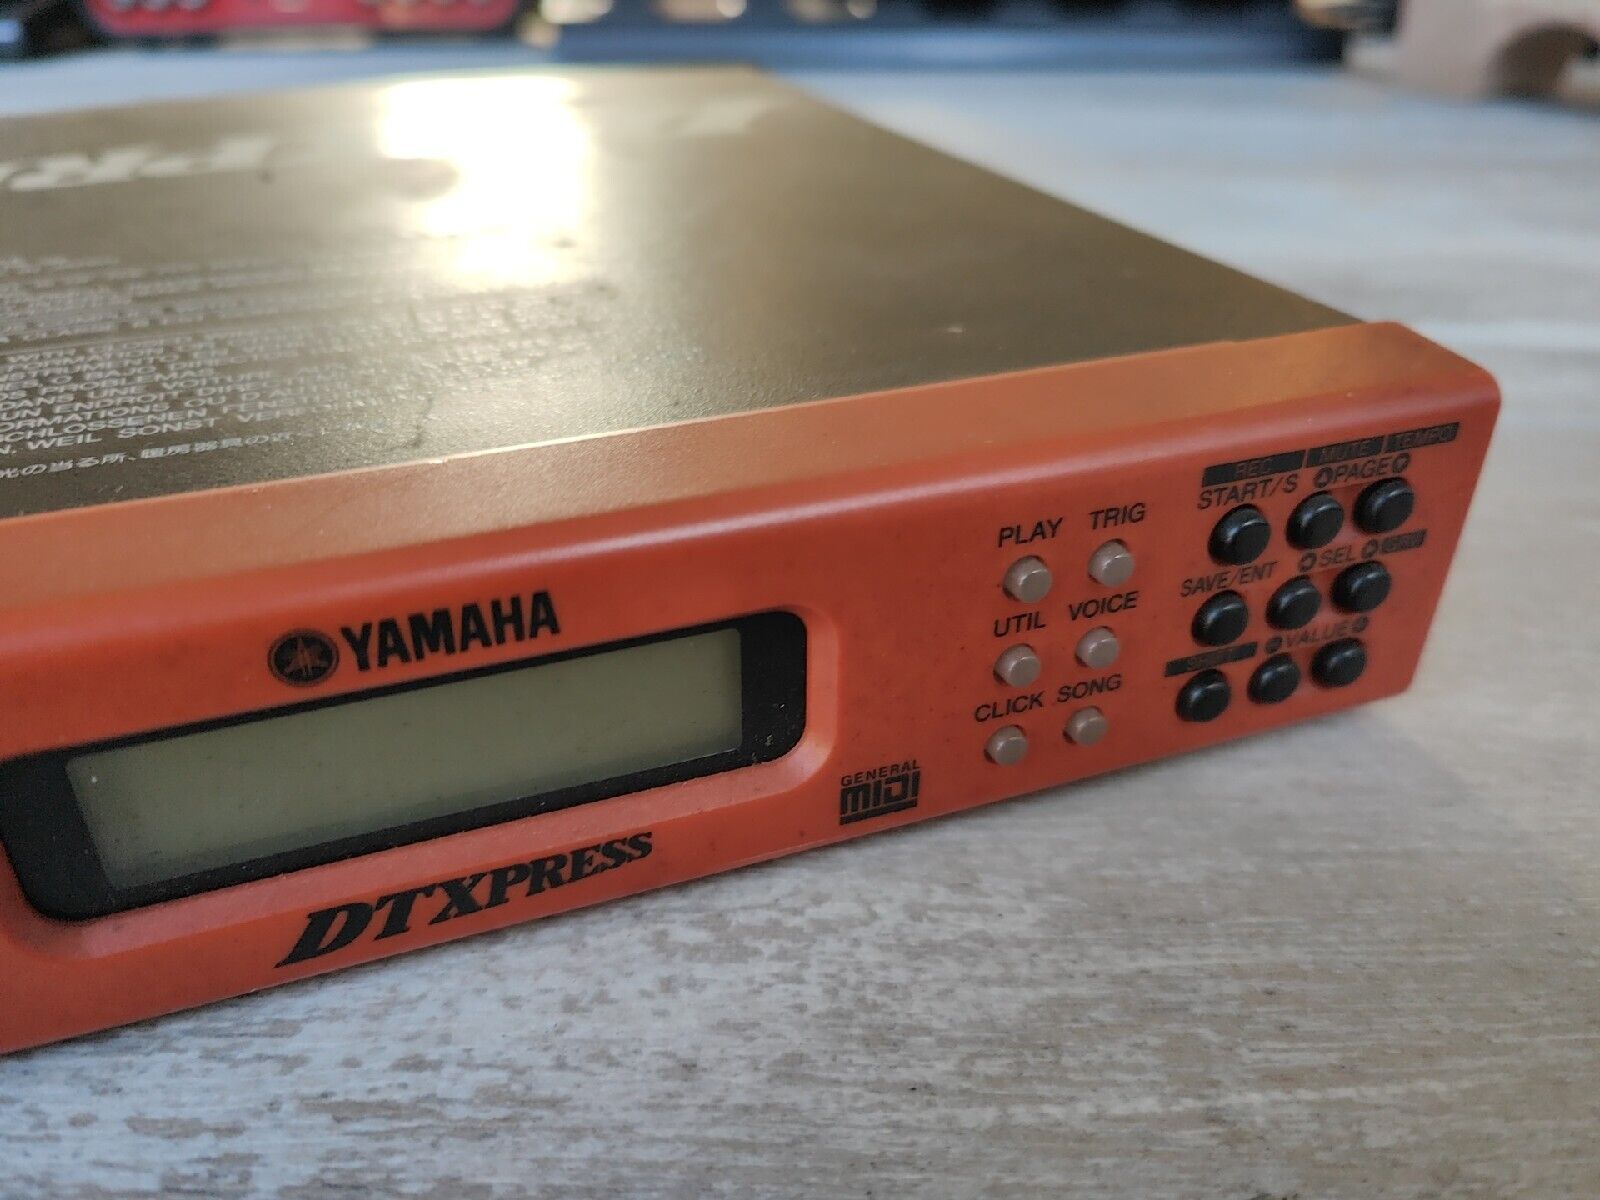 Yamaha DTXPRESS Drum Trigger Module